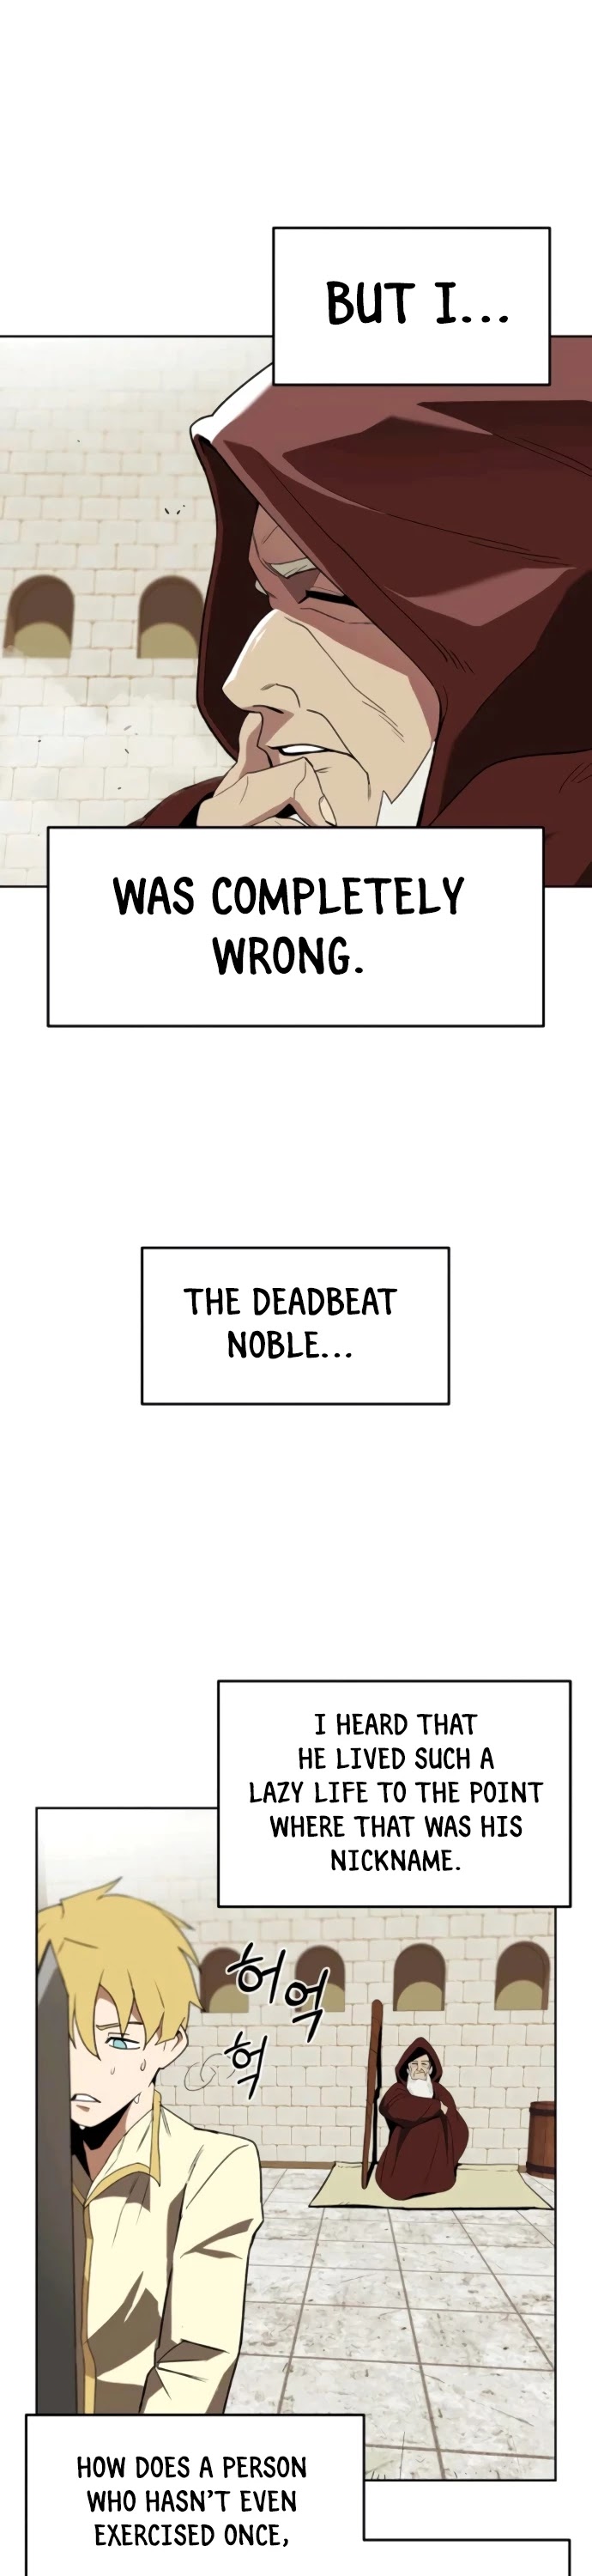 reformation of the deadbeat noble B5manga, read reformation of the deadbeat noble, read reformation of the deadbeat noble manga,